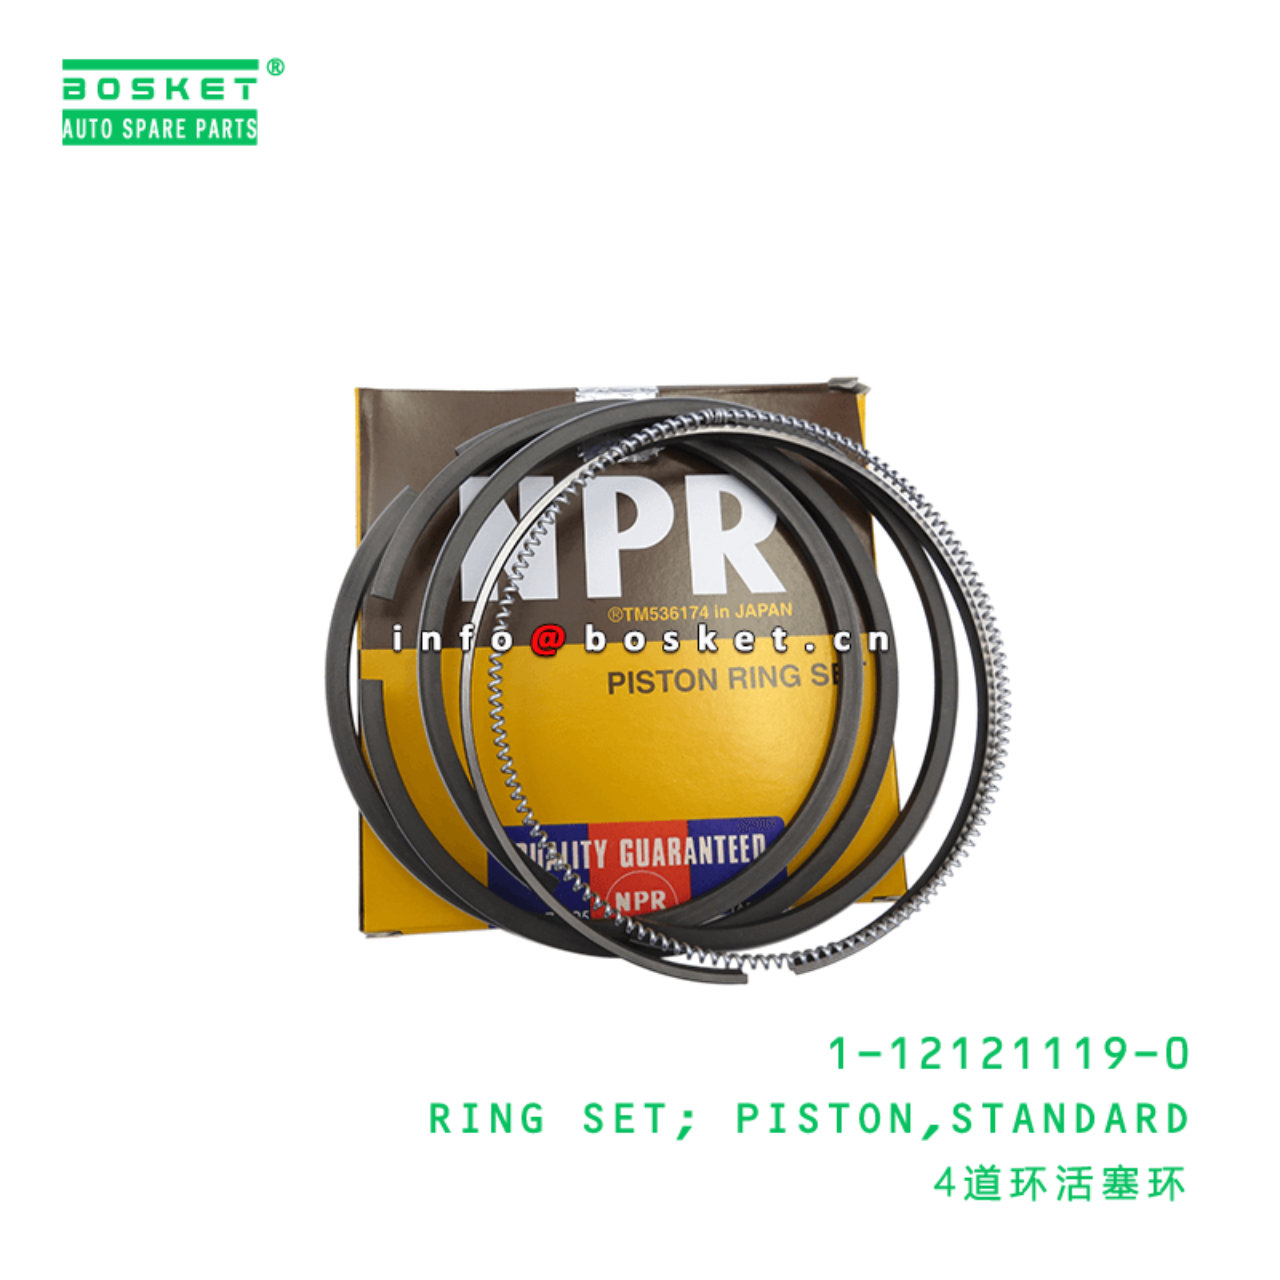  1-12121119-0 Standard Piston Ring Set 1121211190 Suitable for ISUZU NPR 6SD1T